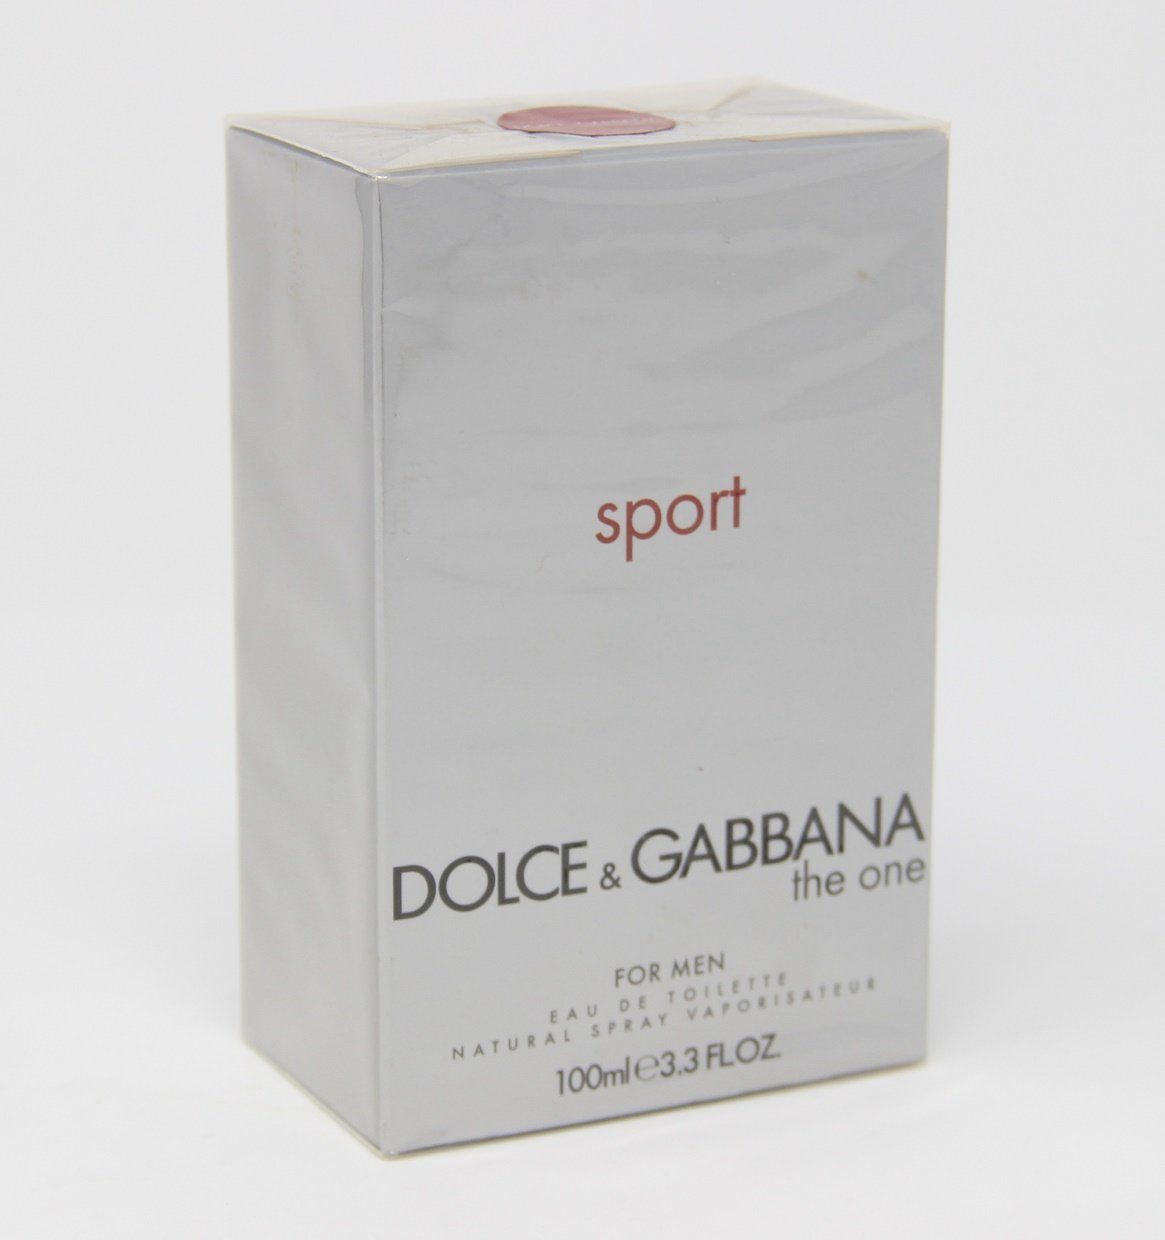 DOLCE & GABBANA de ml Gabbana Spray 100 Eau One For & Toilette Eau Men Toilette The Dolce Sport de